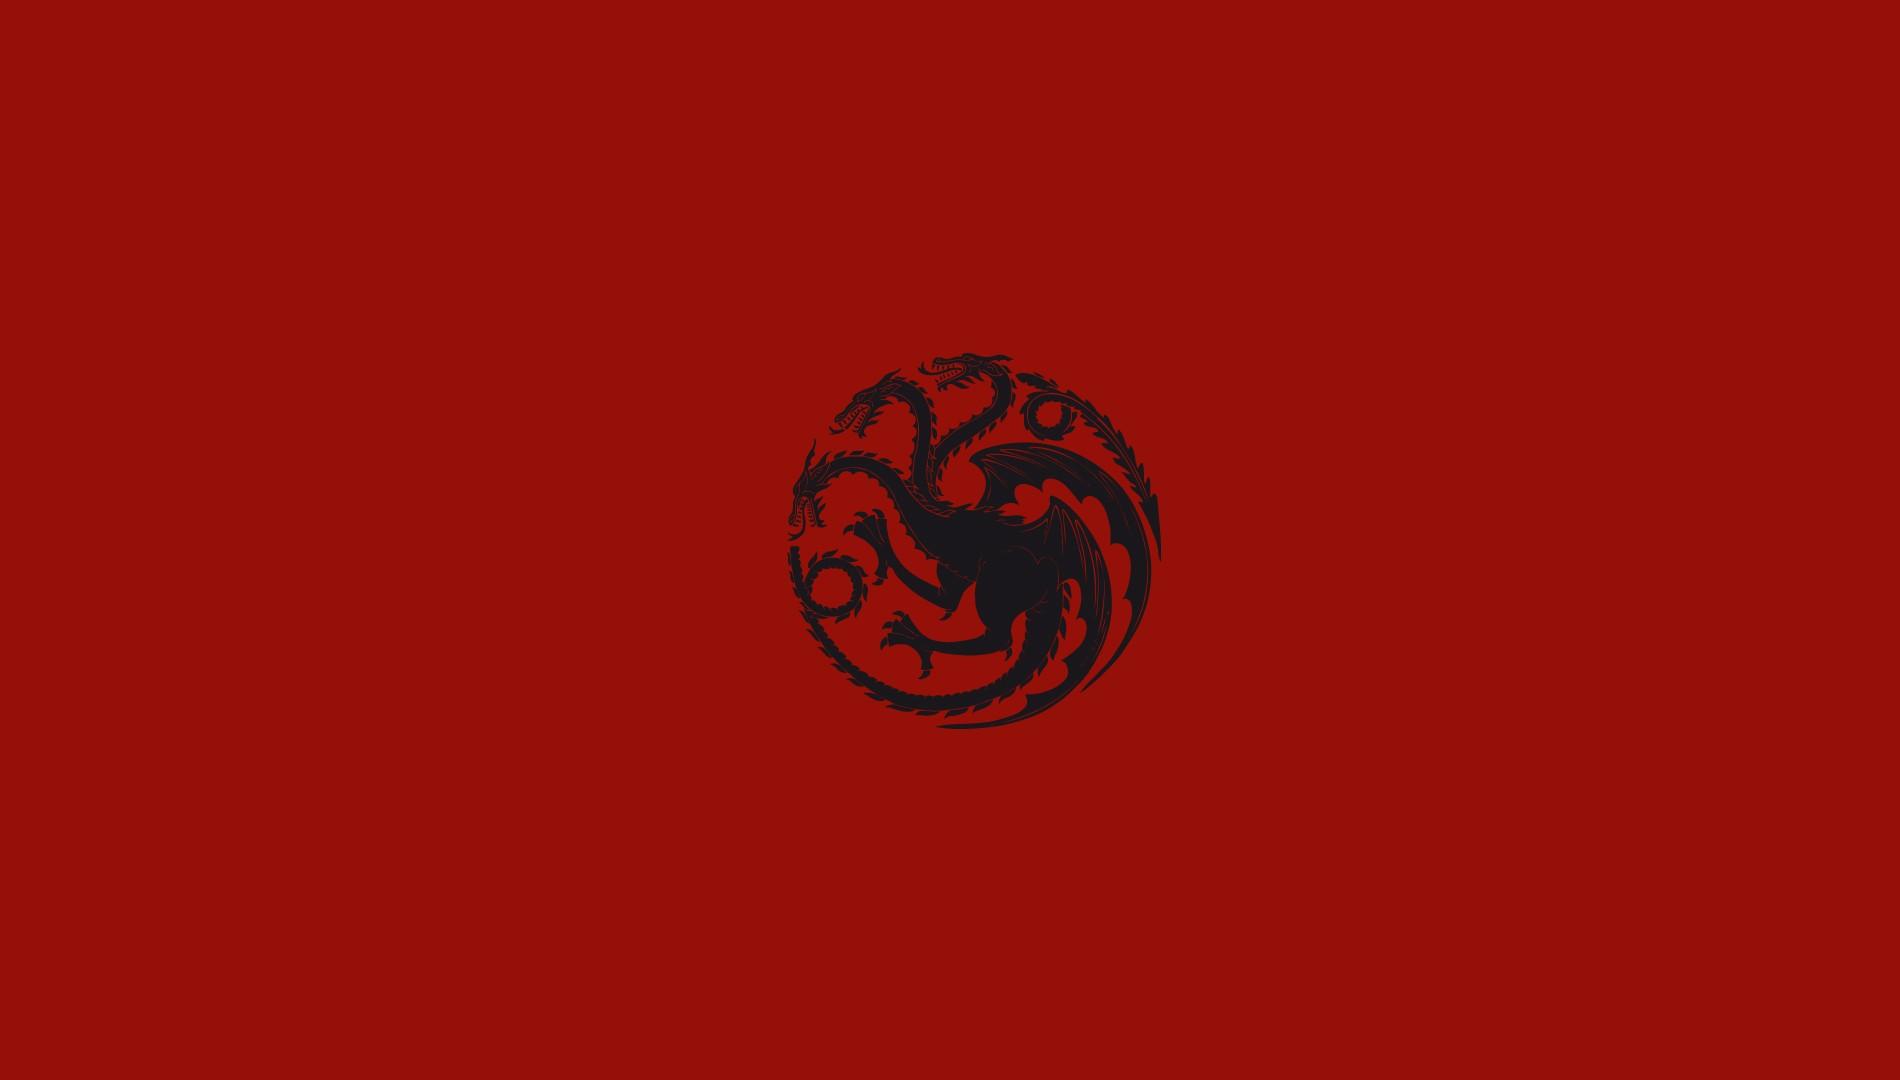 Game of Thrones House Targaryen black dragon on red